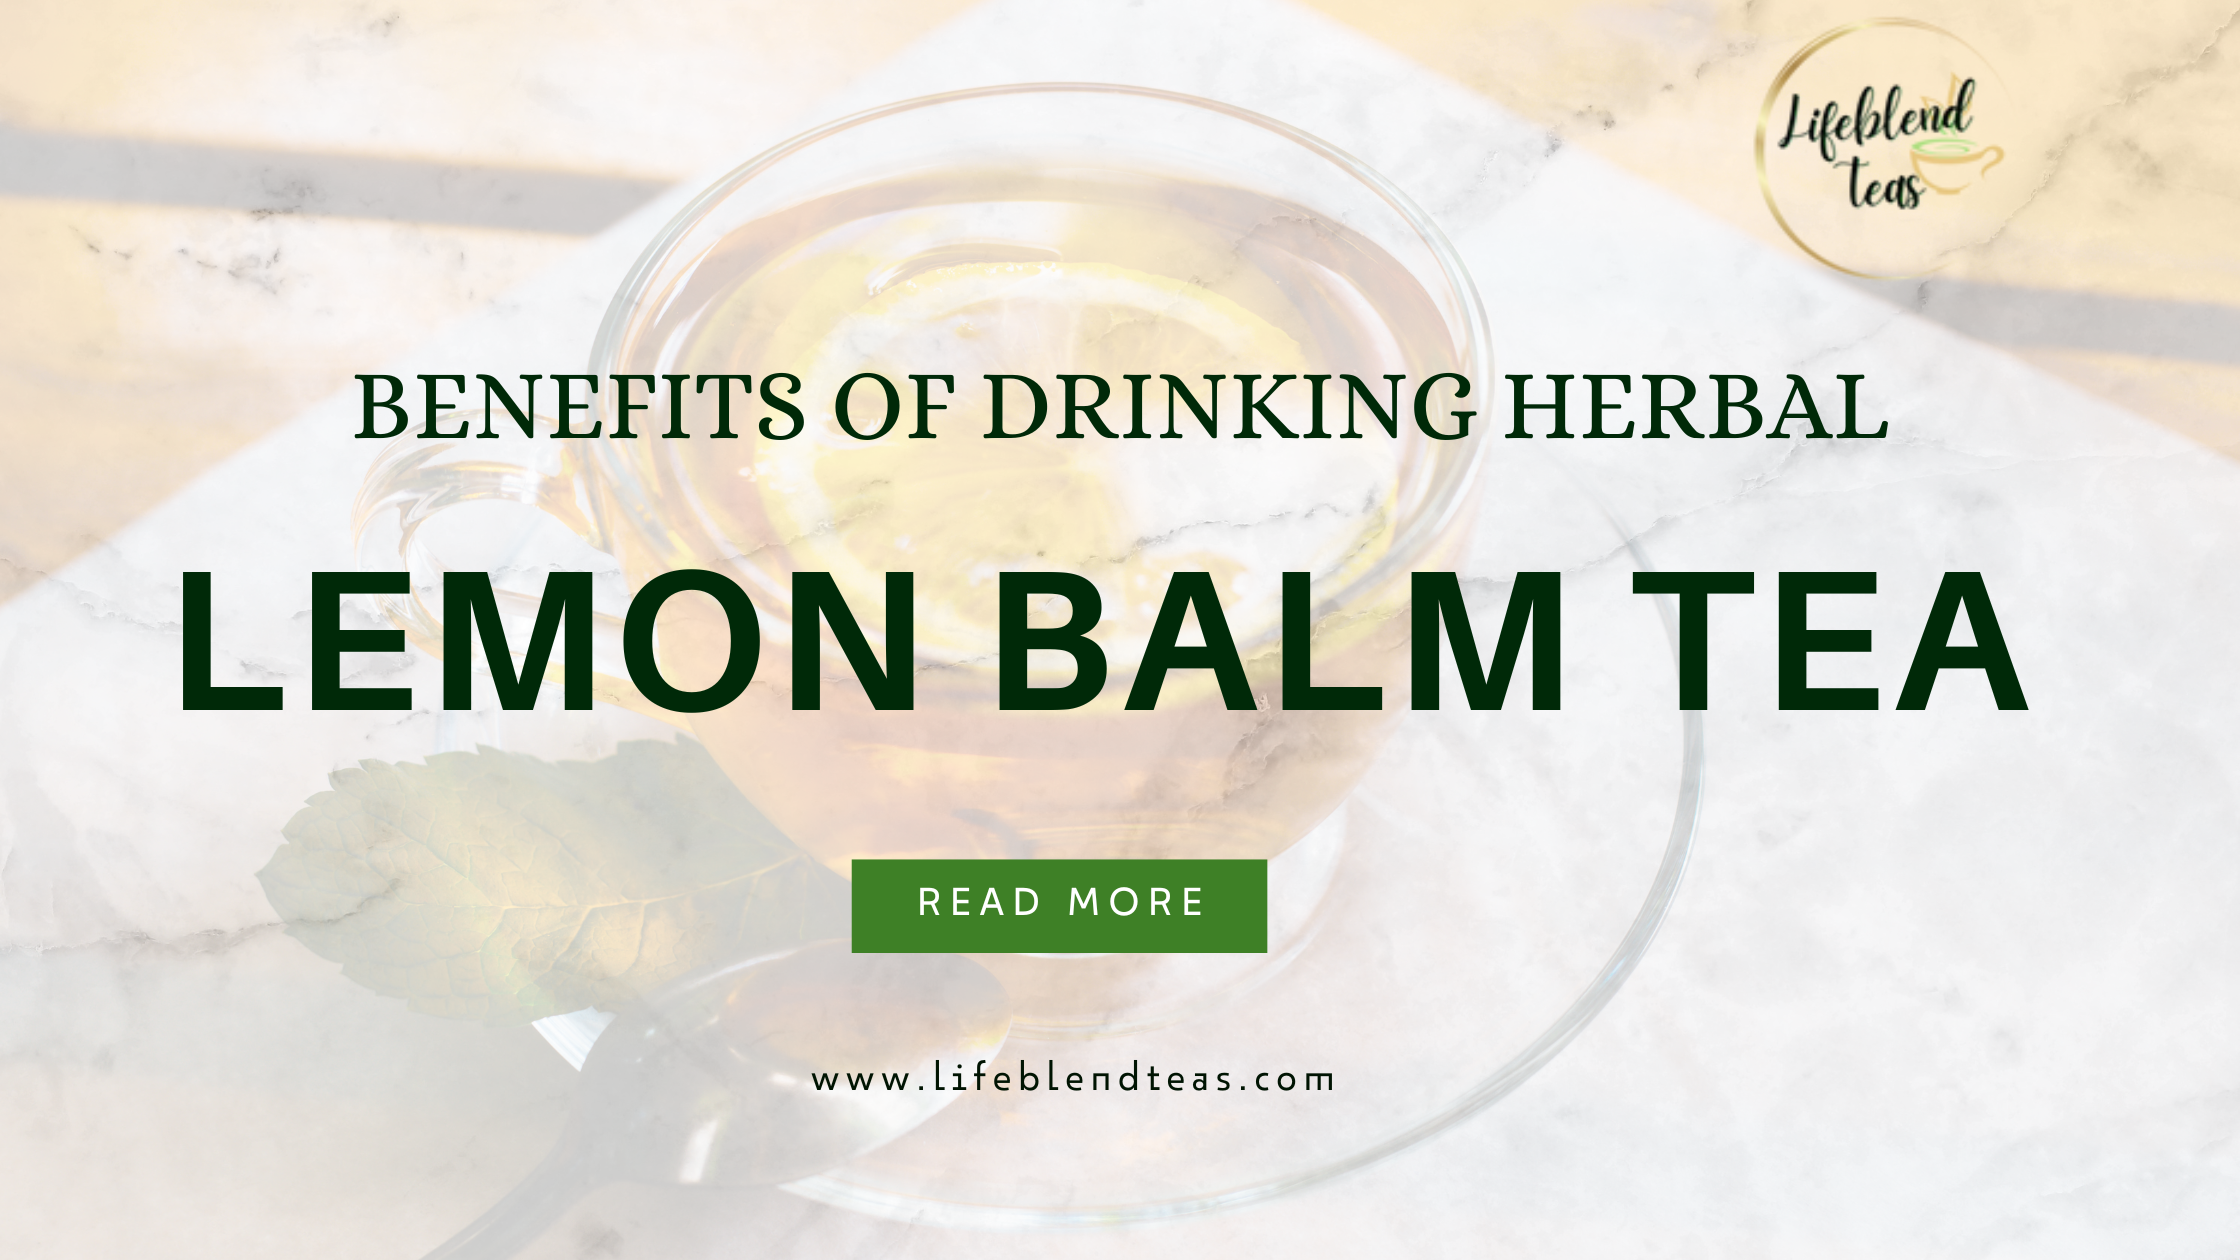 What is Herbal lemon balm tea good for?